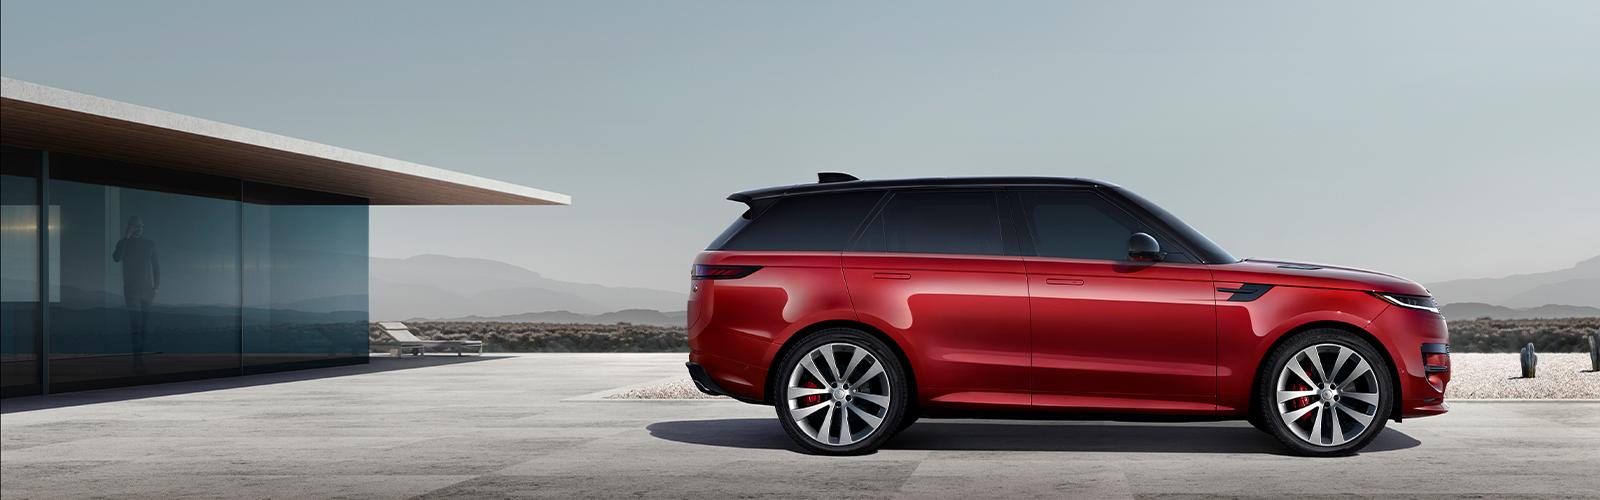 2021 Range Rover Sport Dimensions | Interior, Exterior